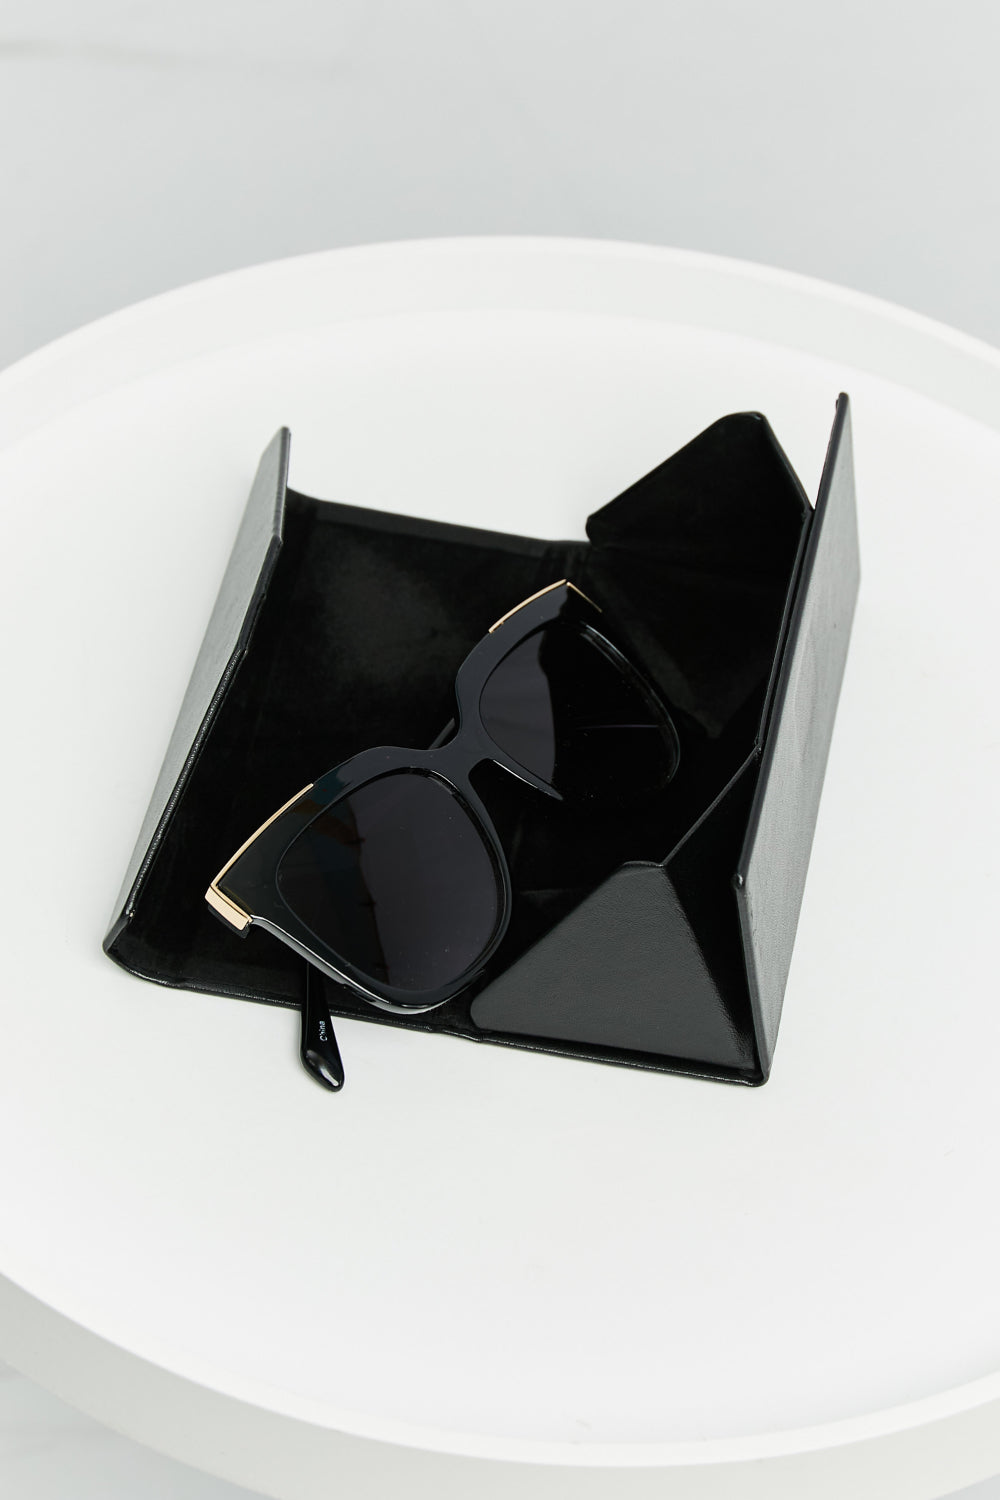 Metal Frame Full Rim Sunglasses Print on any thing USA/STOD clothes